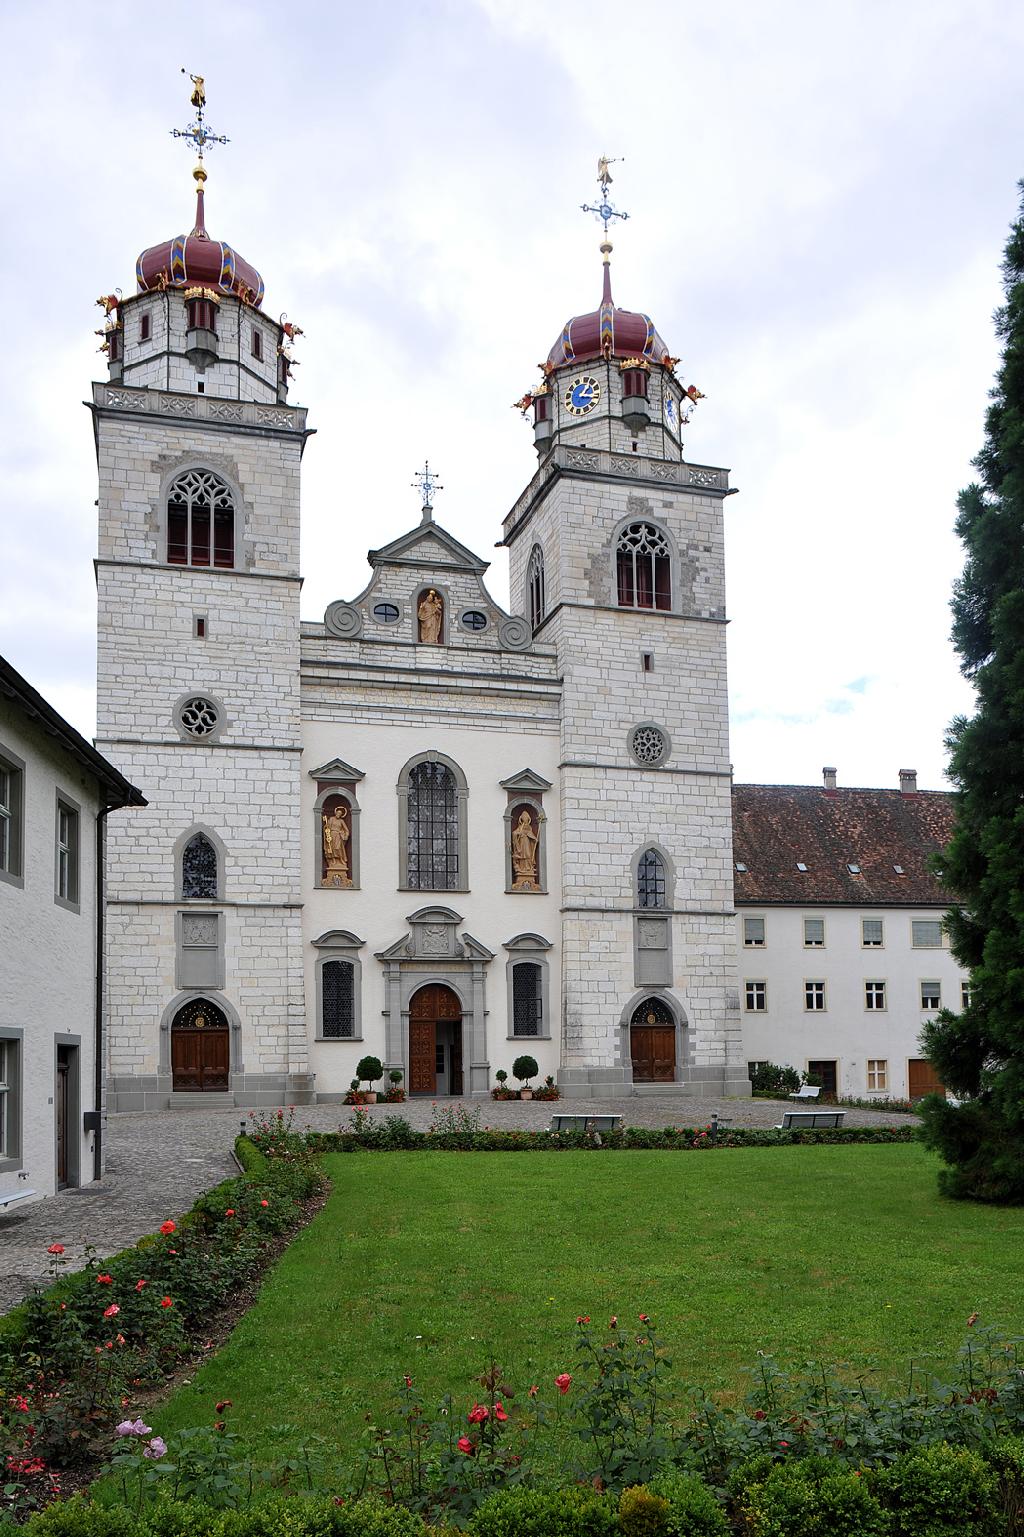 Kloster Rheinau in Rheinau